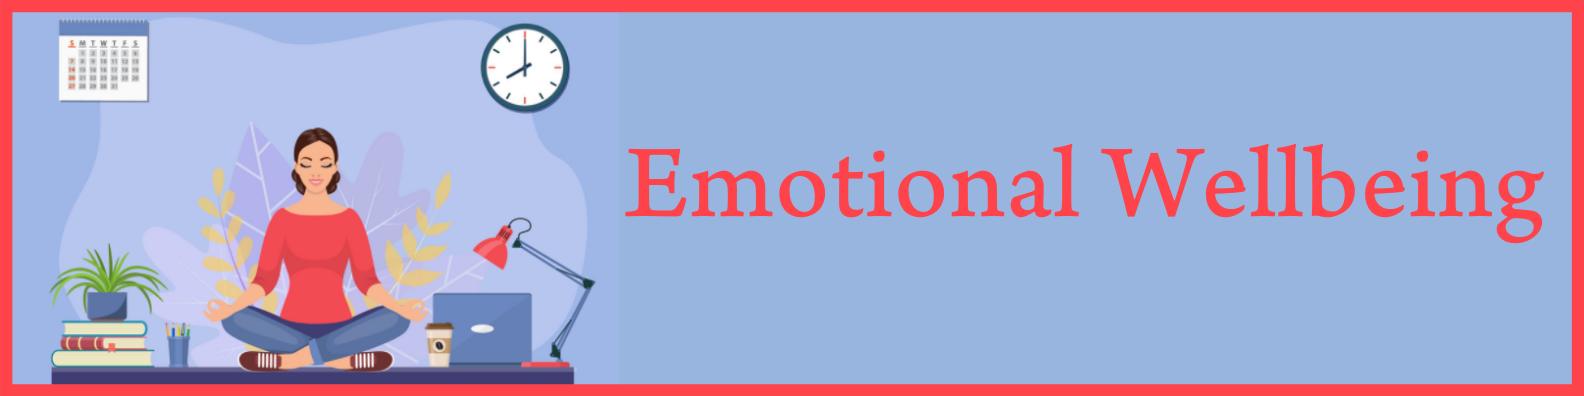 Emotional Wellbeing Banner